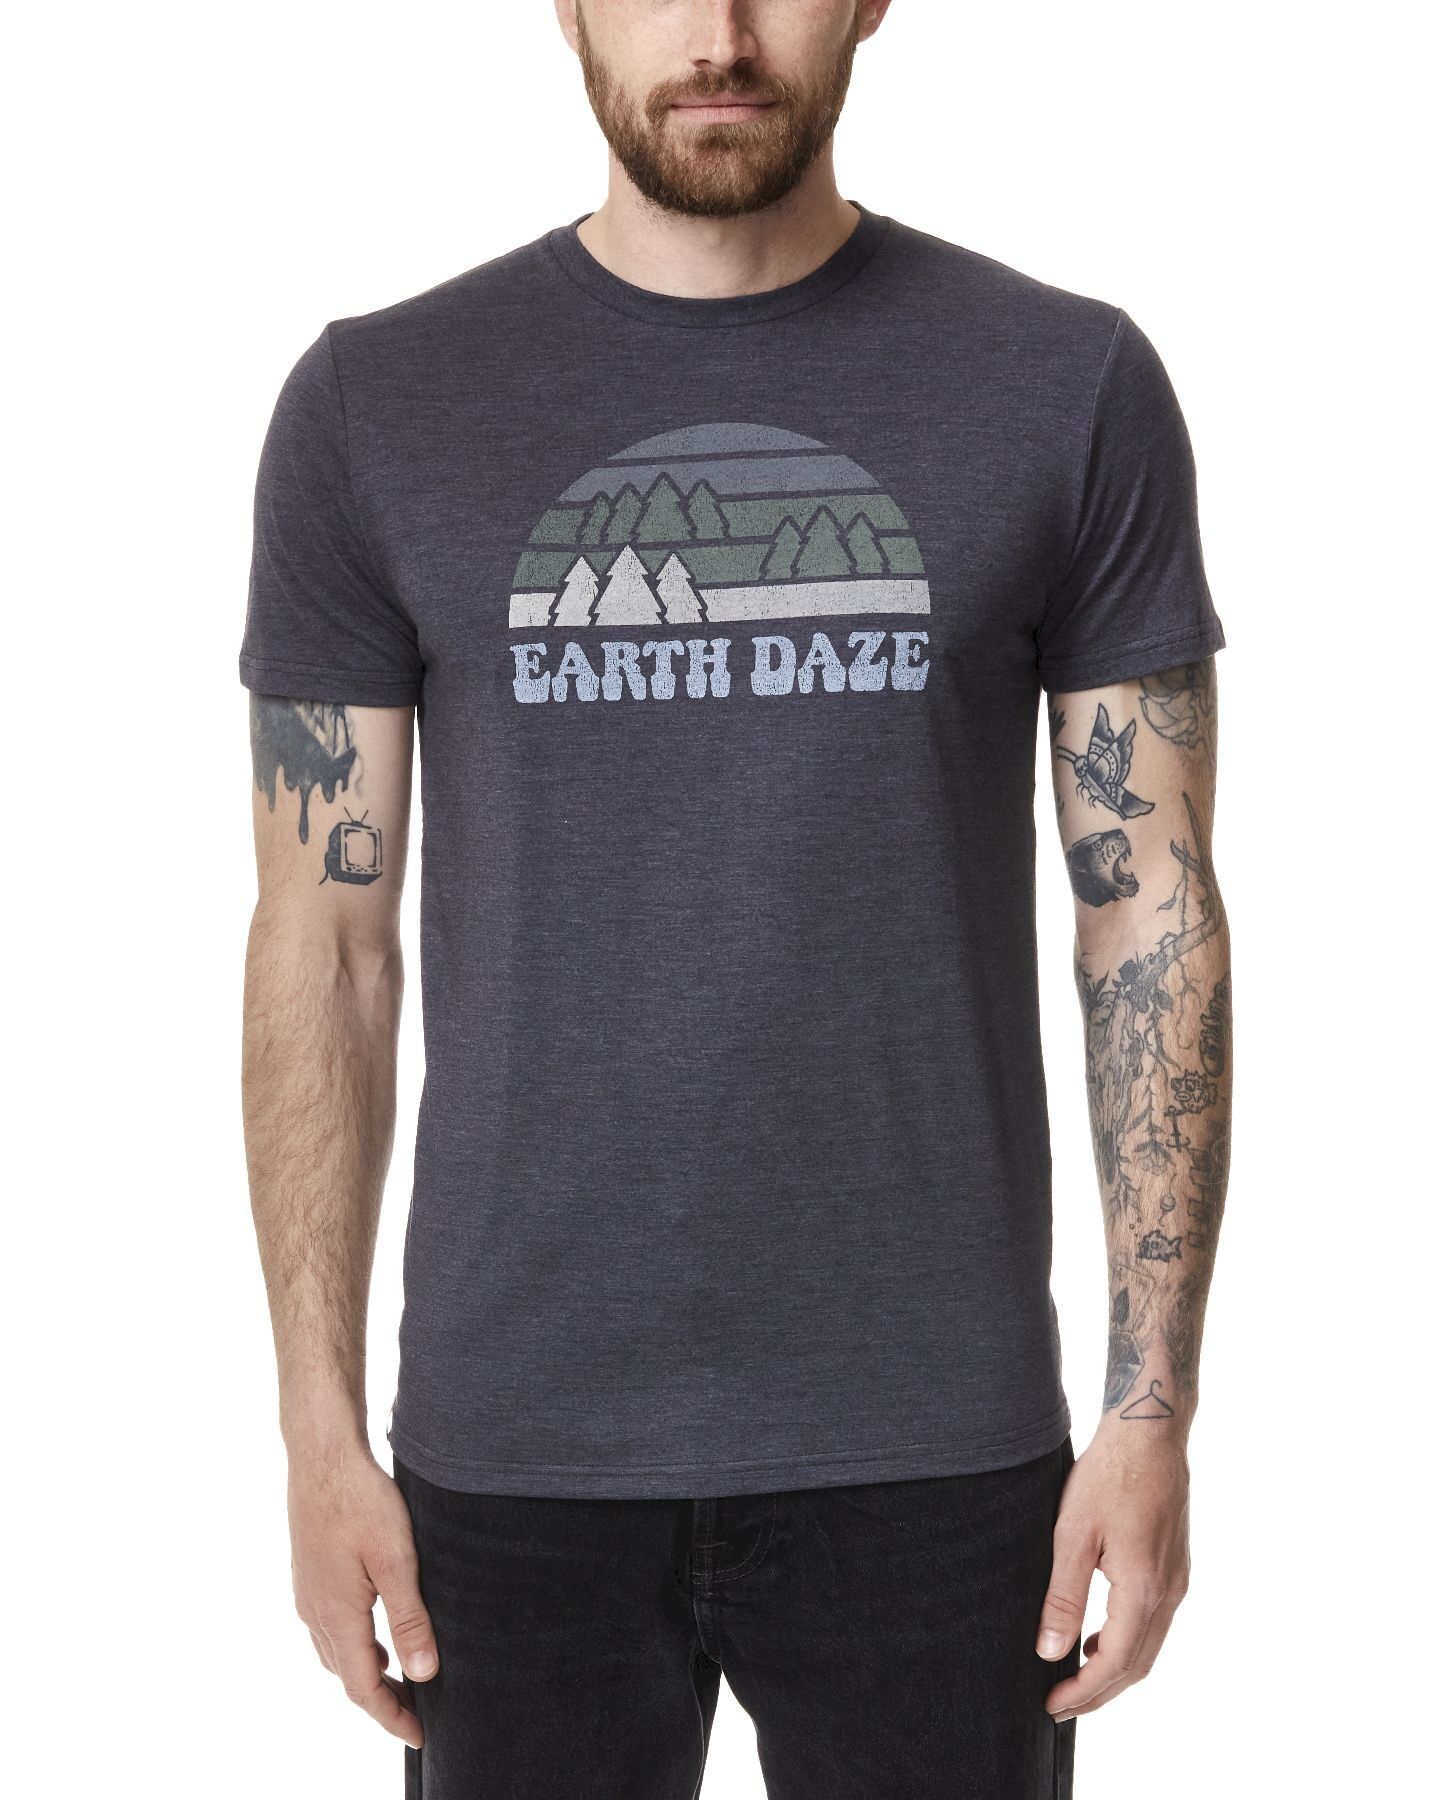 Tentree Earth Daze - Camiseta - Hombre